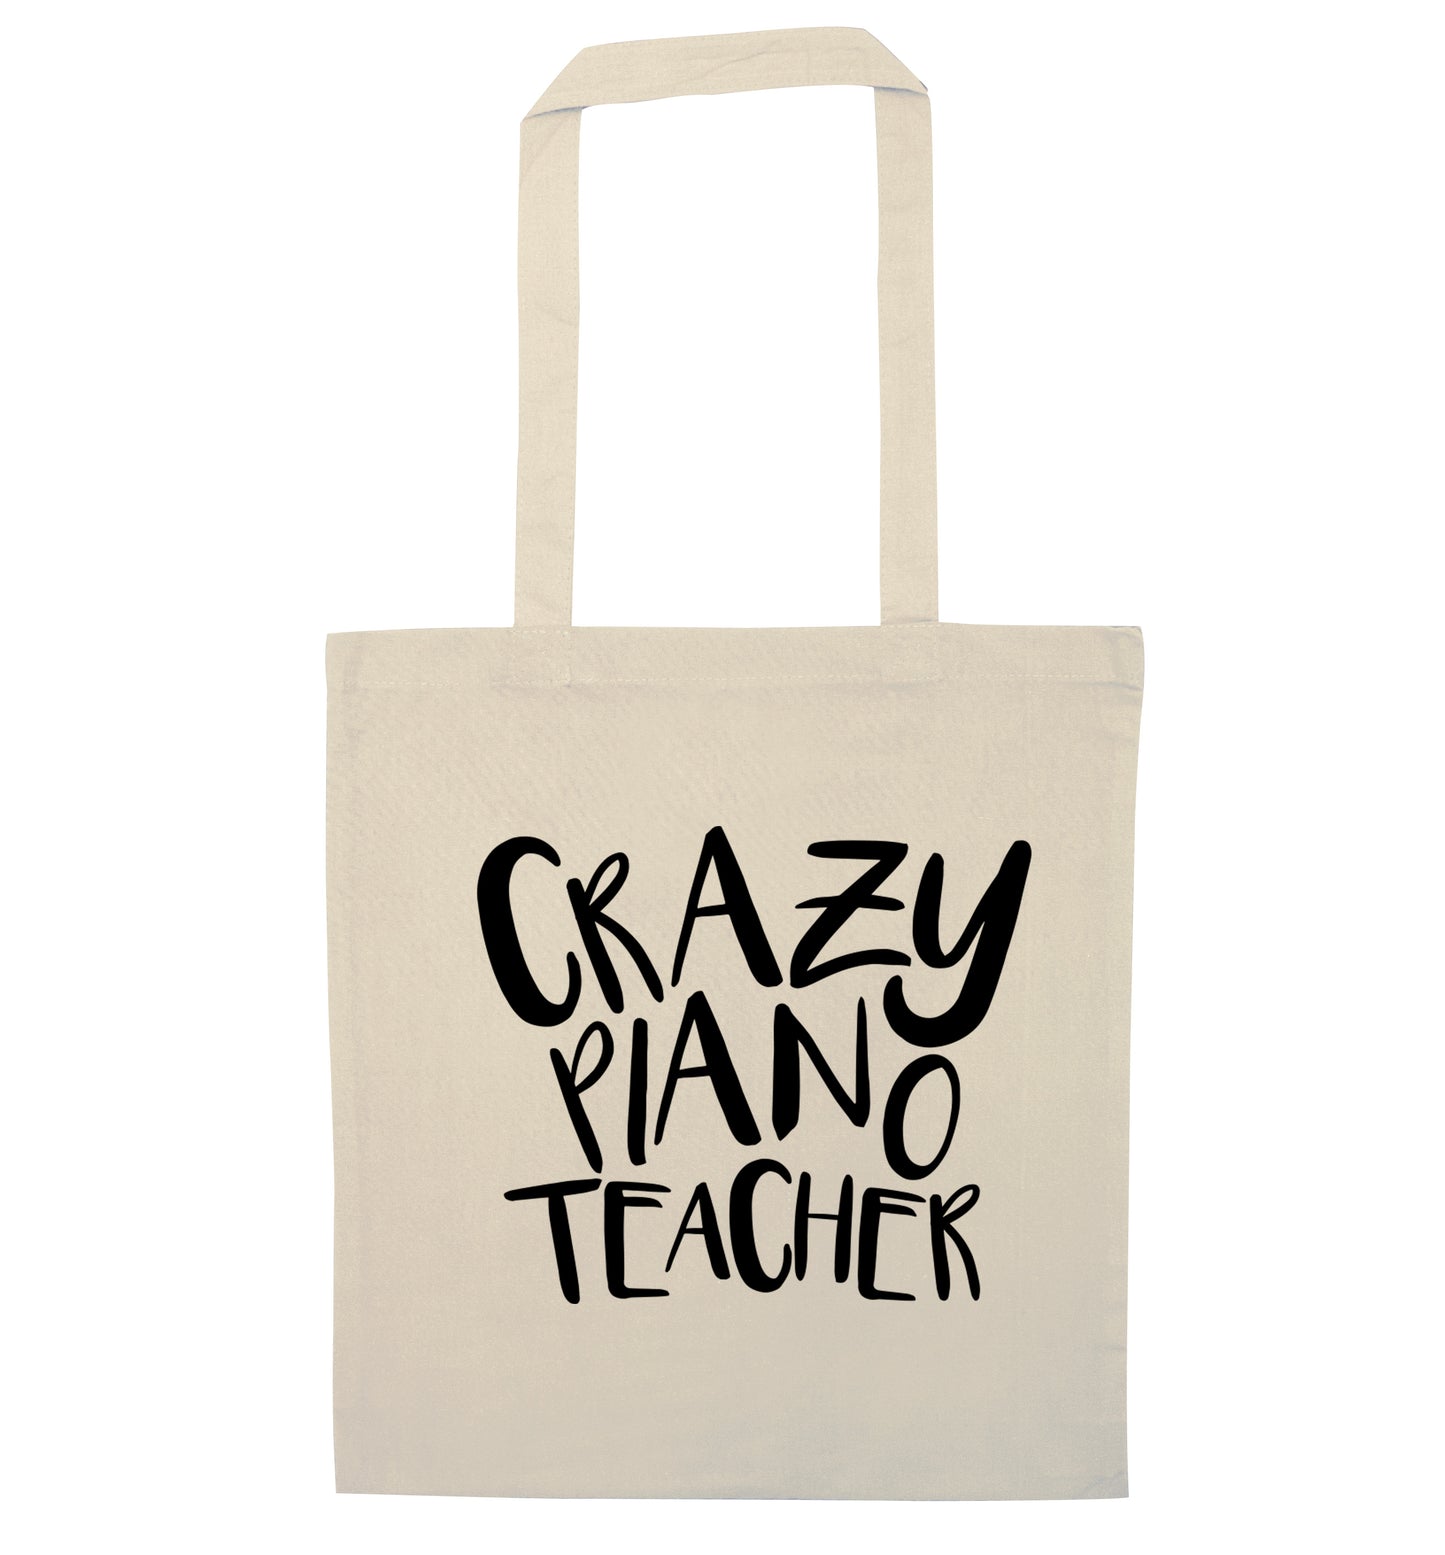 Crazy piano teacher natural tote bag